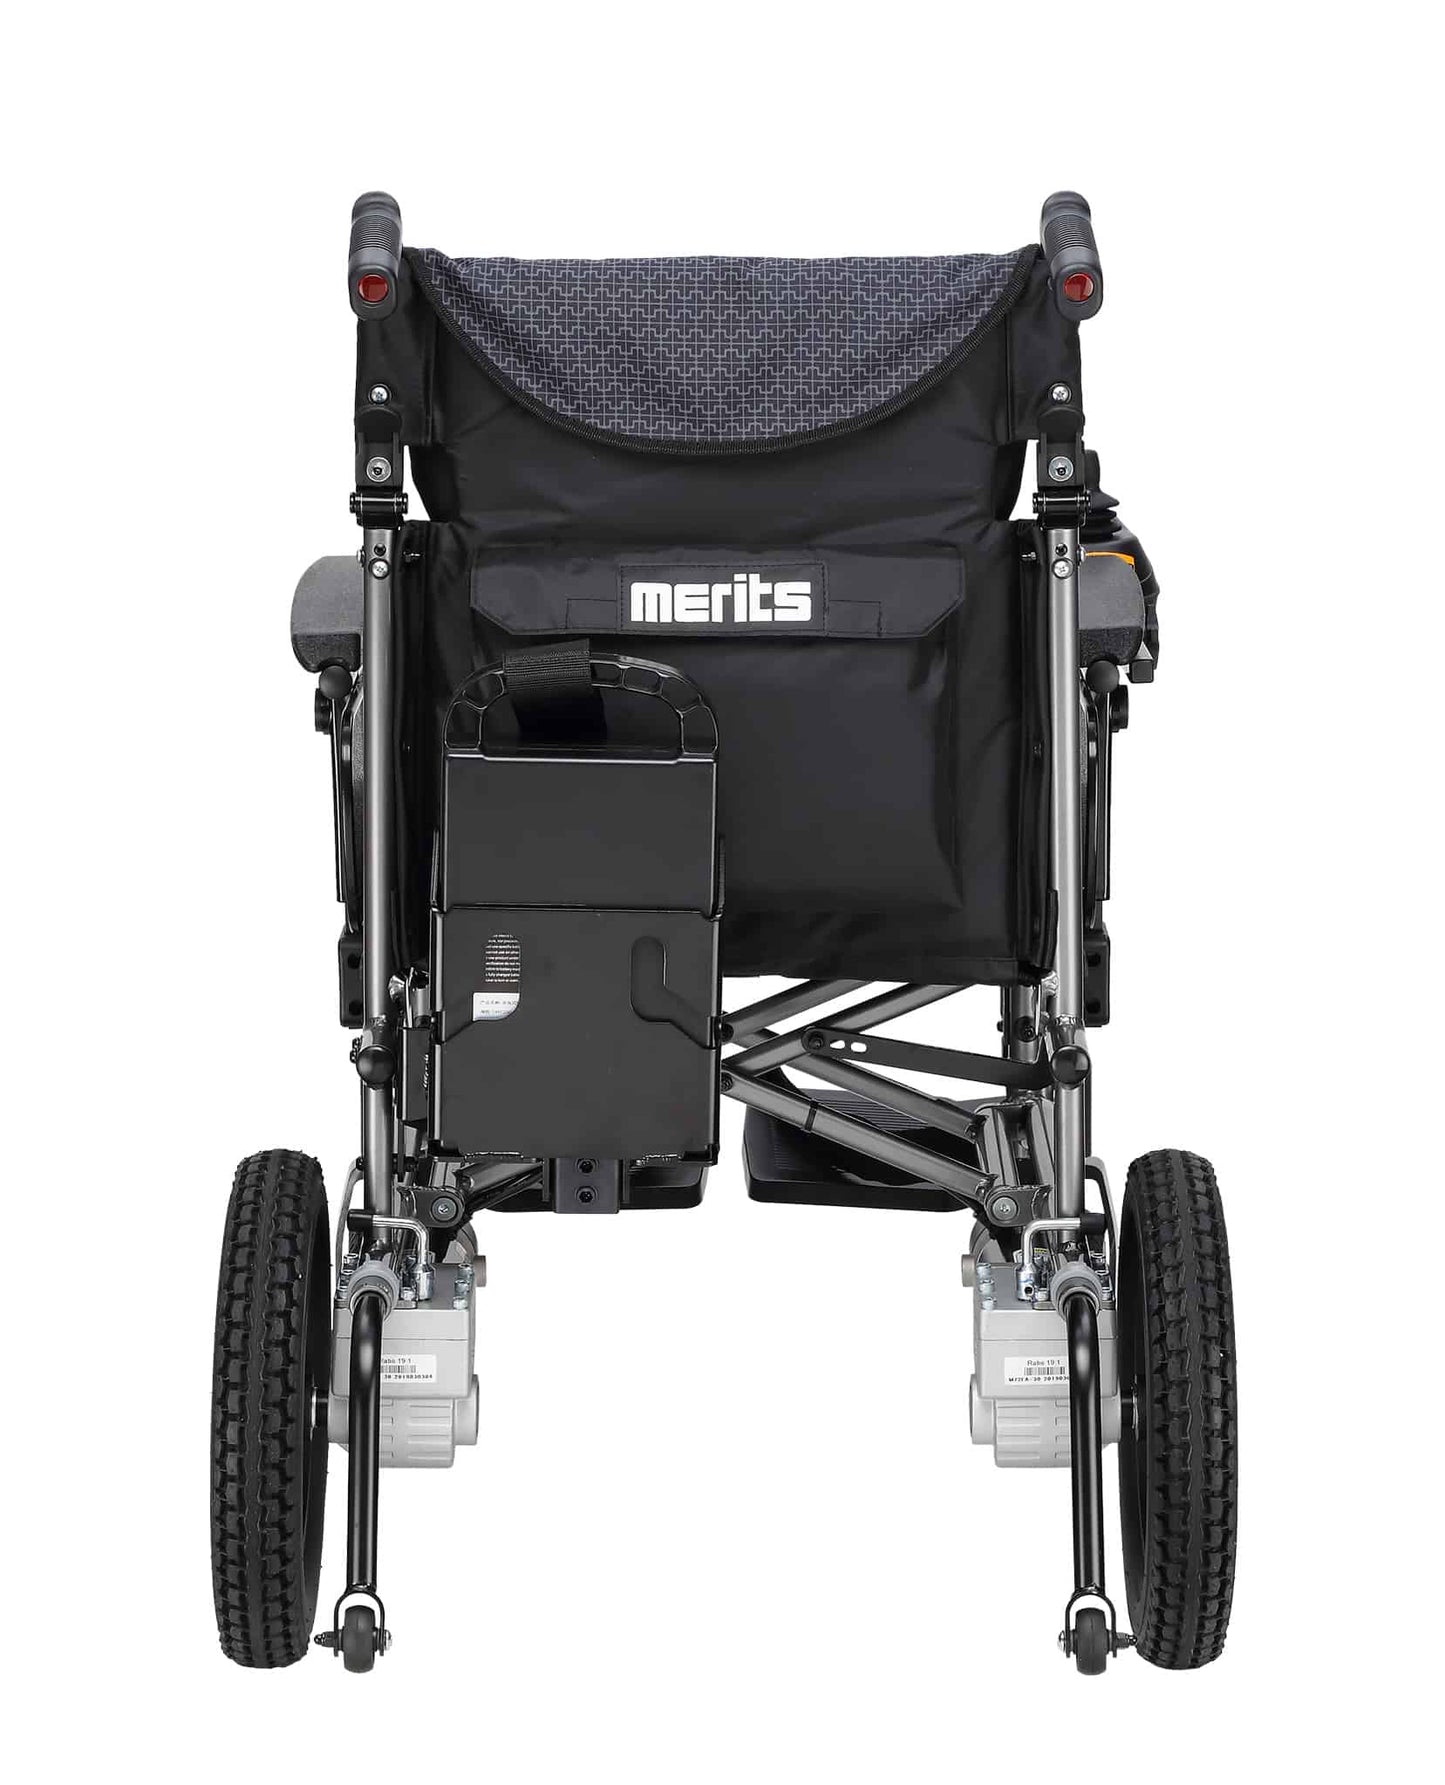 Classic Plus P108A Economy Folding Power Wheelchair